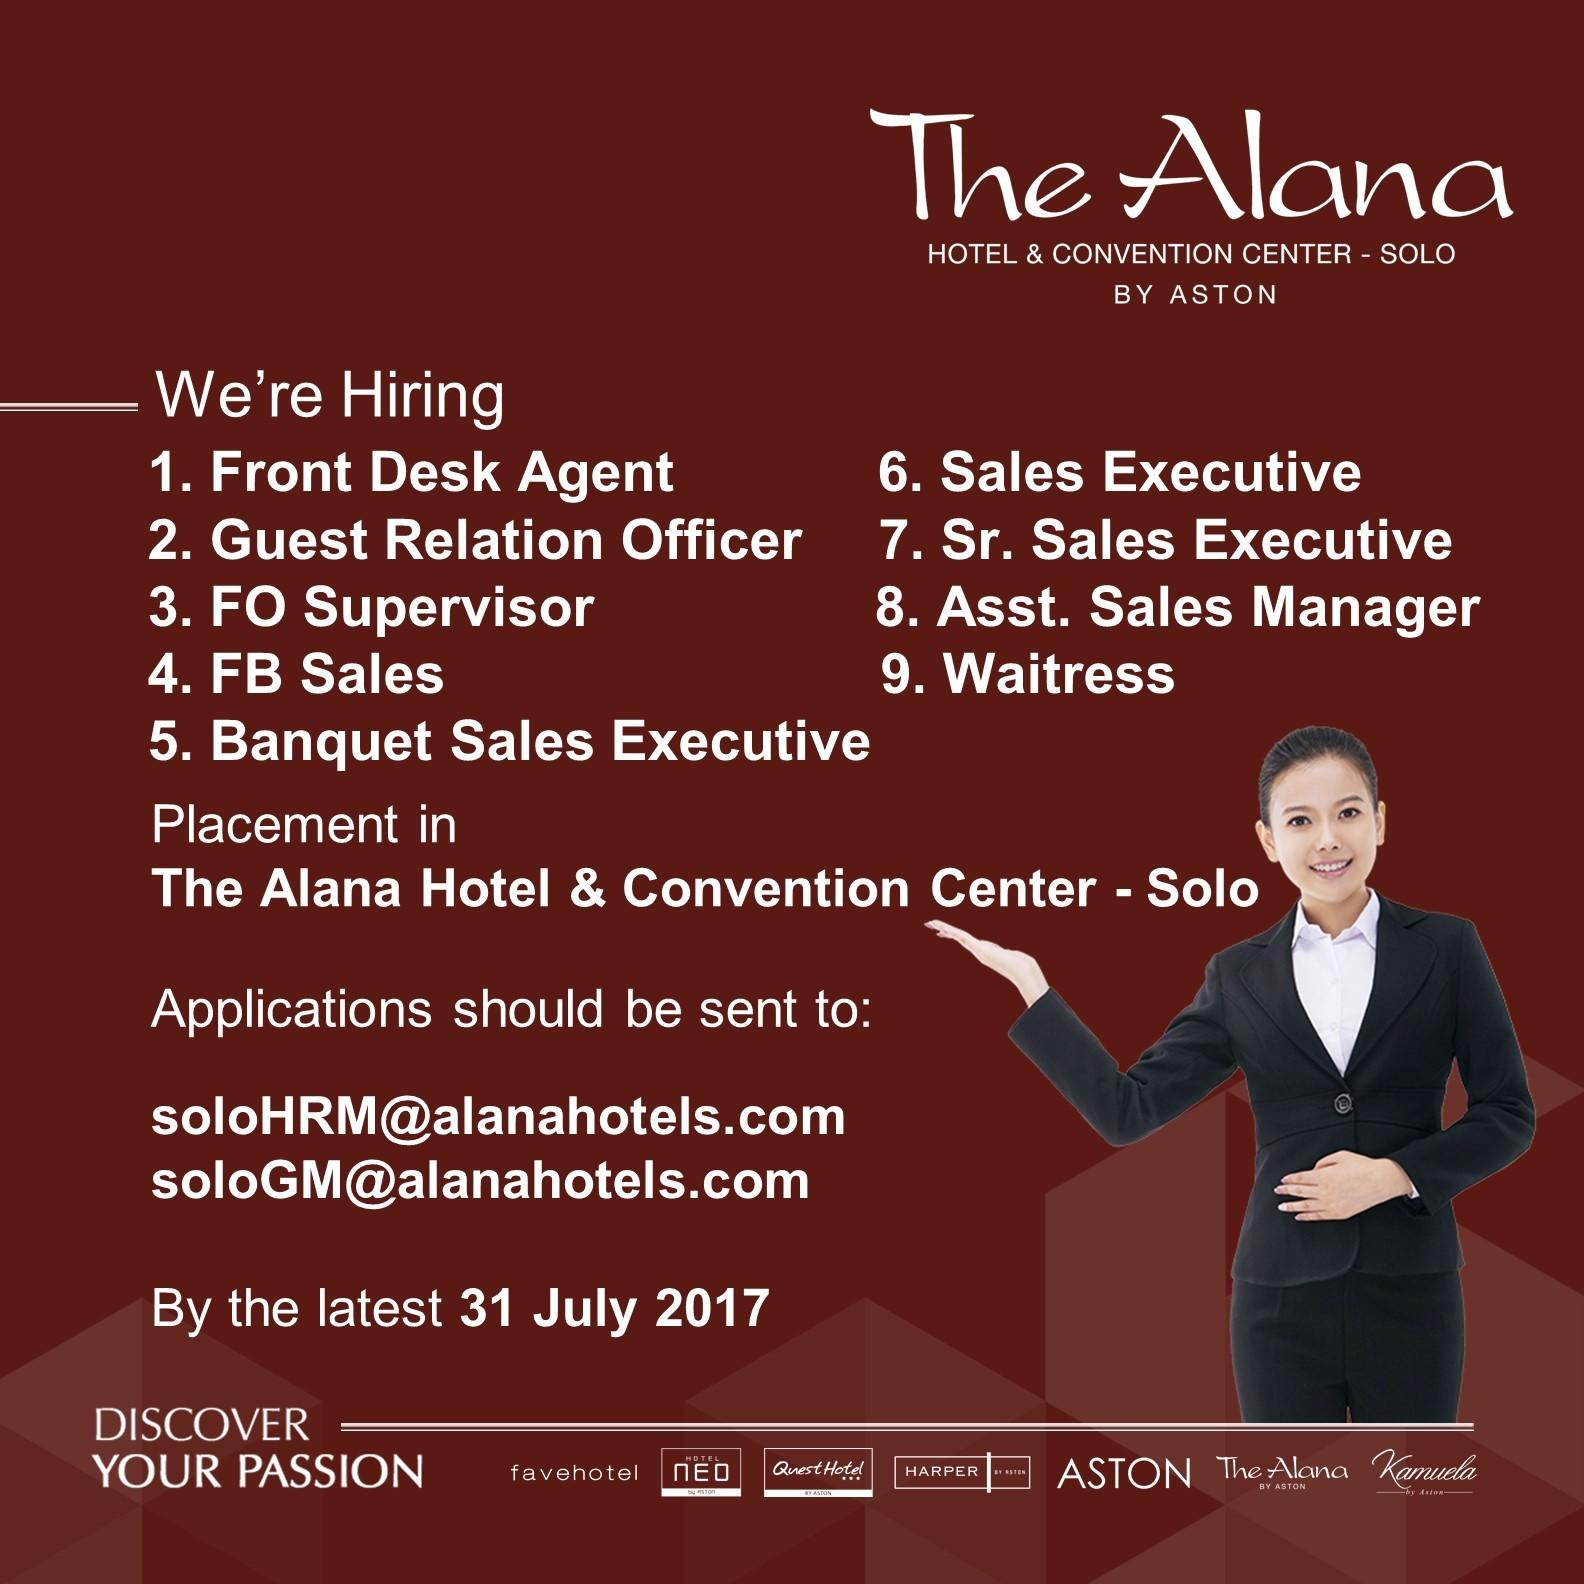 The Alana by Aston Solo Jobs | Hotels Jobs News